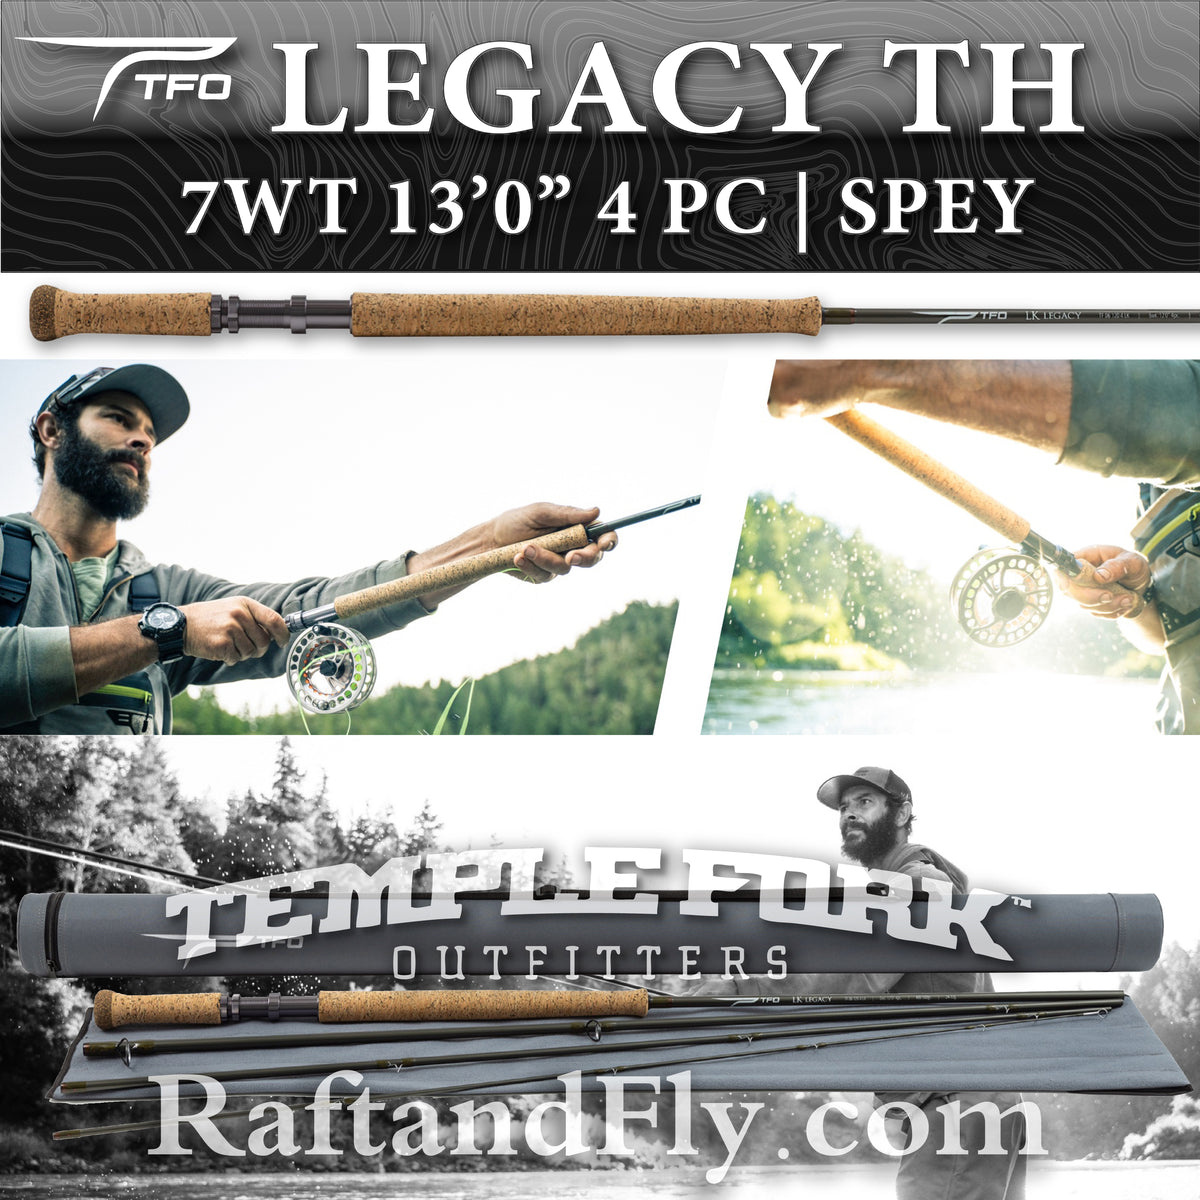 TFO LK Legacy TH Spey 7wt 13'0 – Raft & Fly Shop